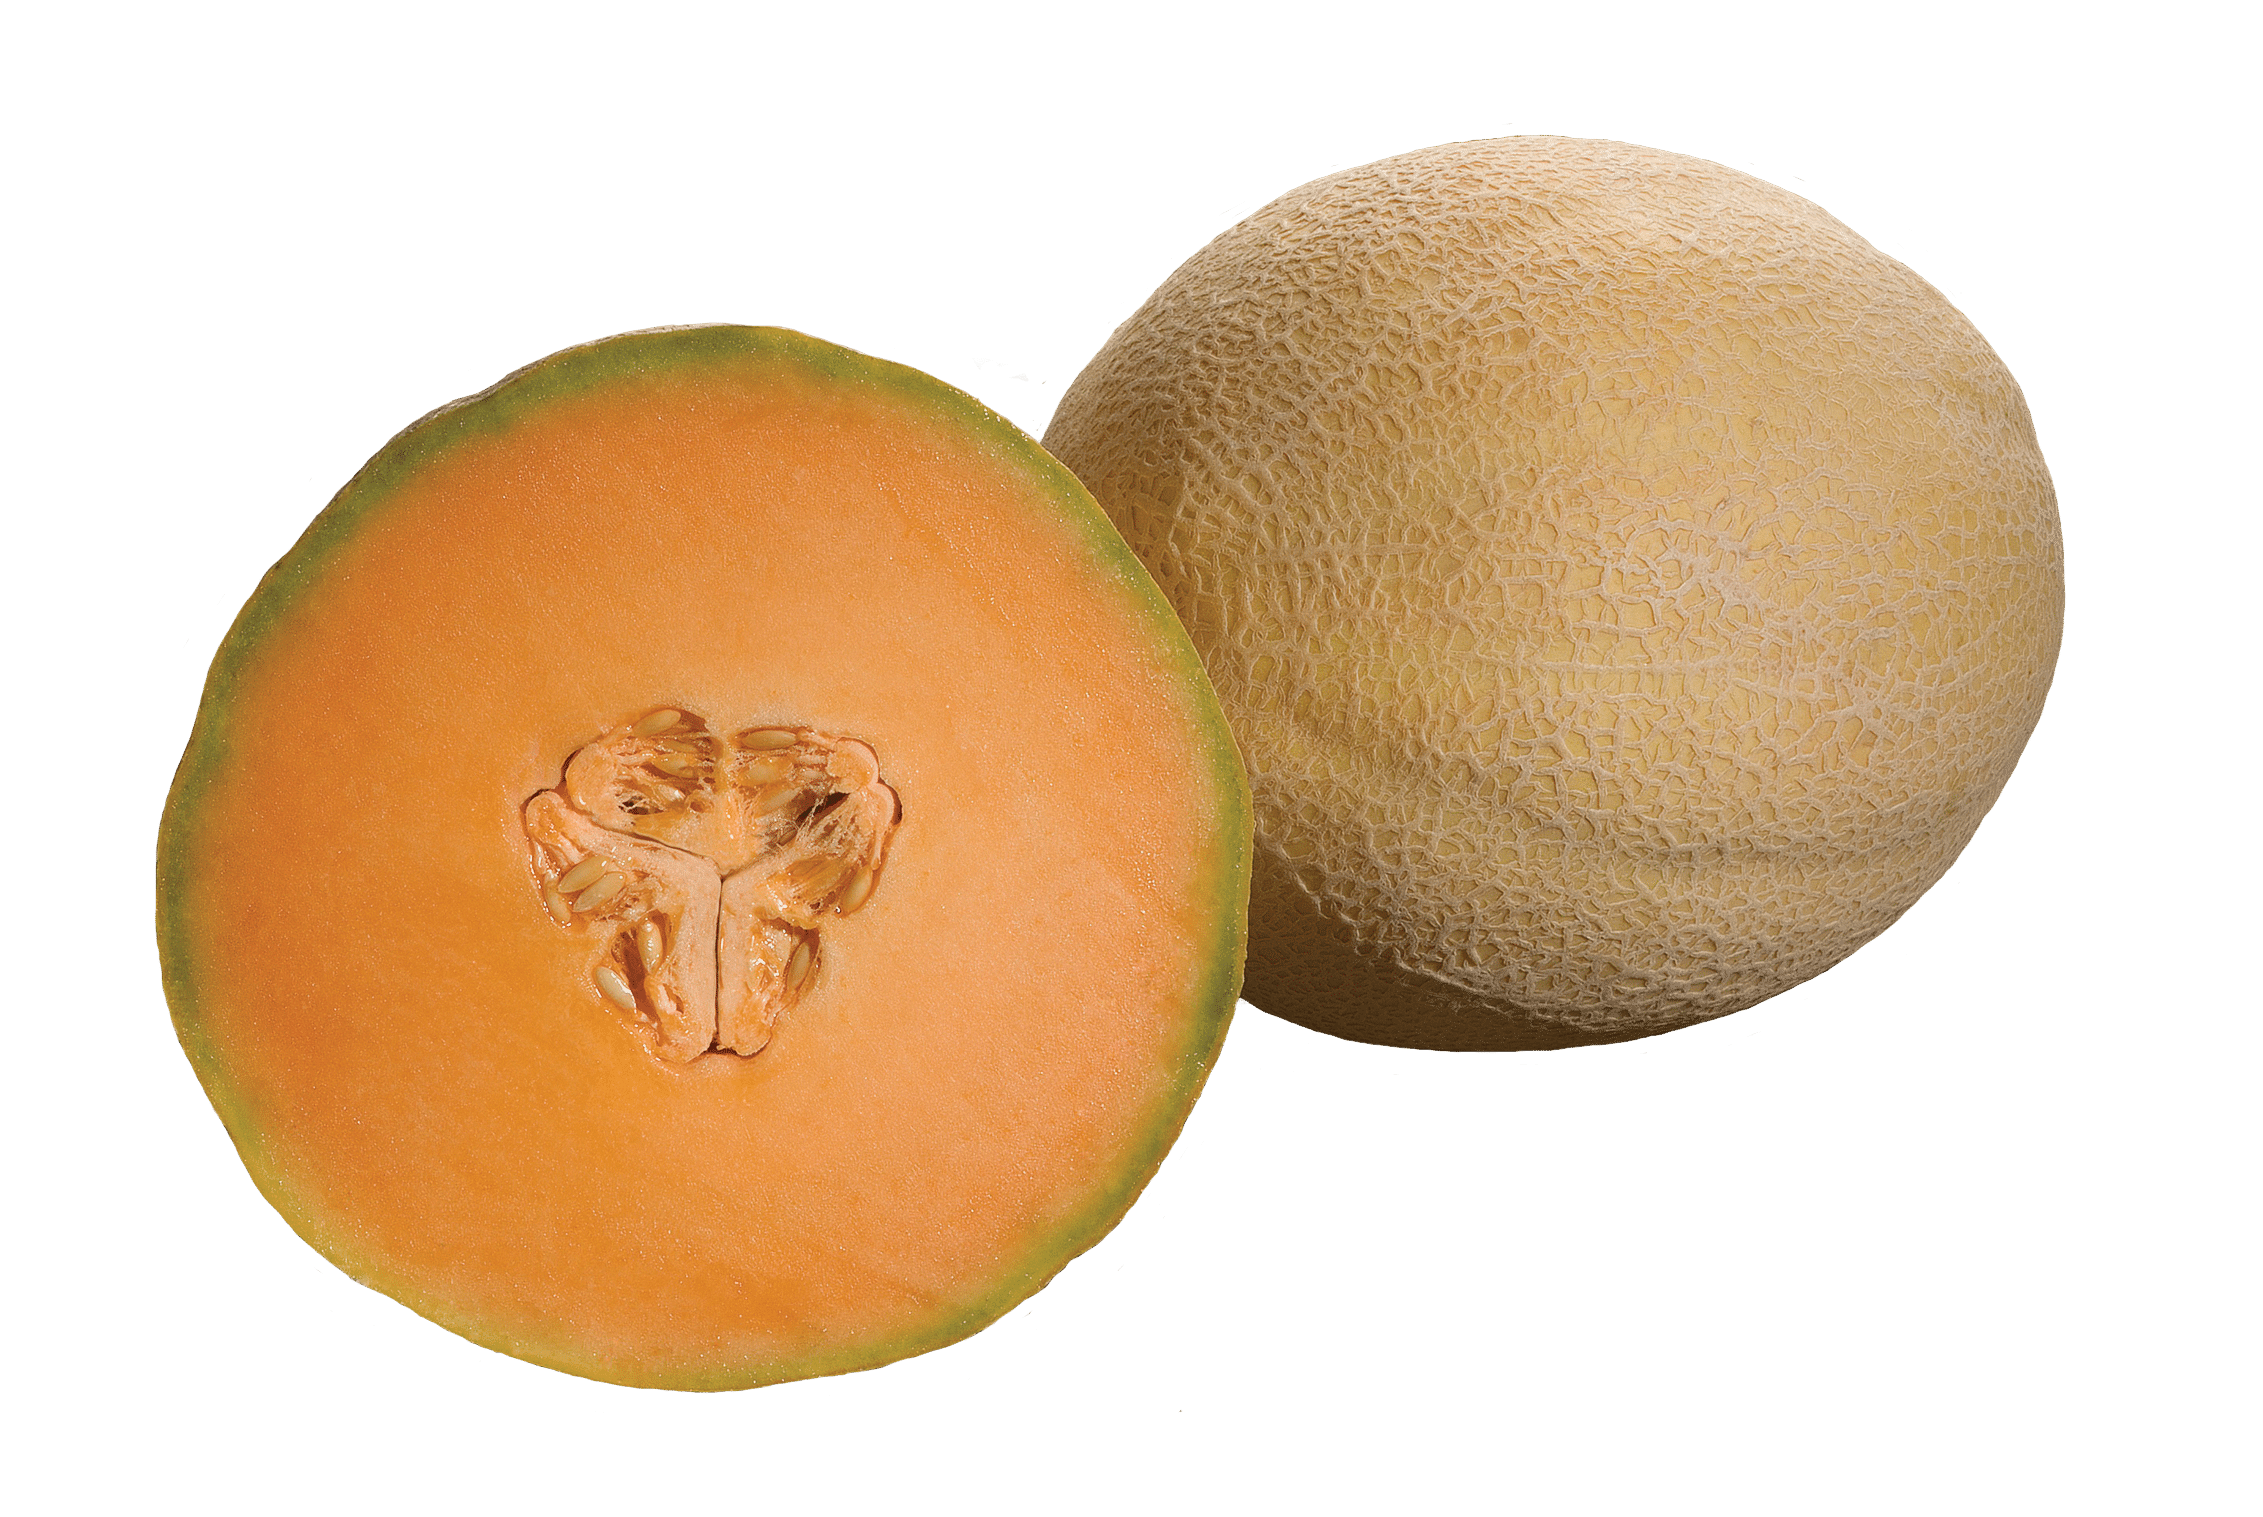 Honey Dew Melon Seed - Orange Flesh